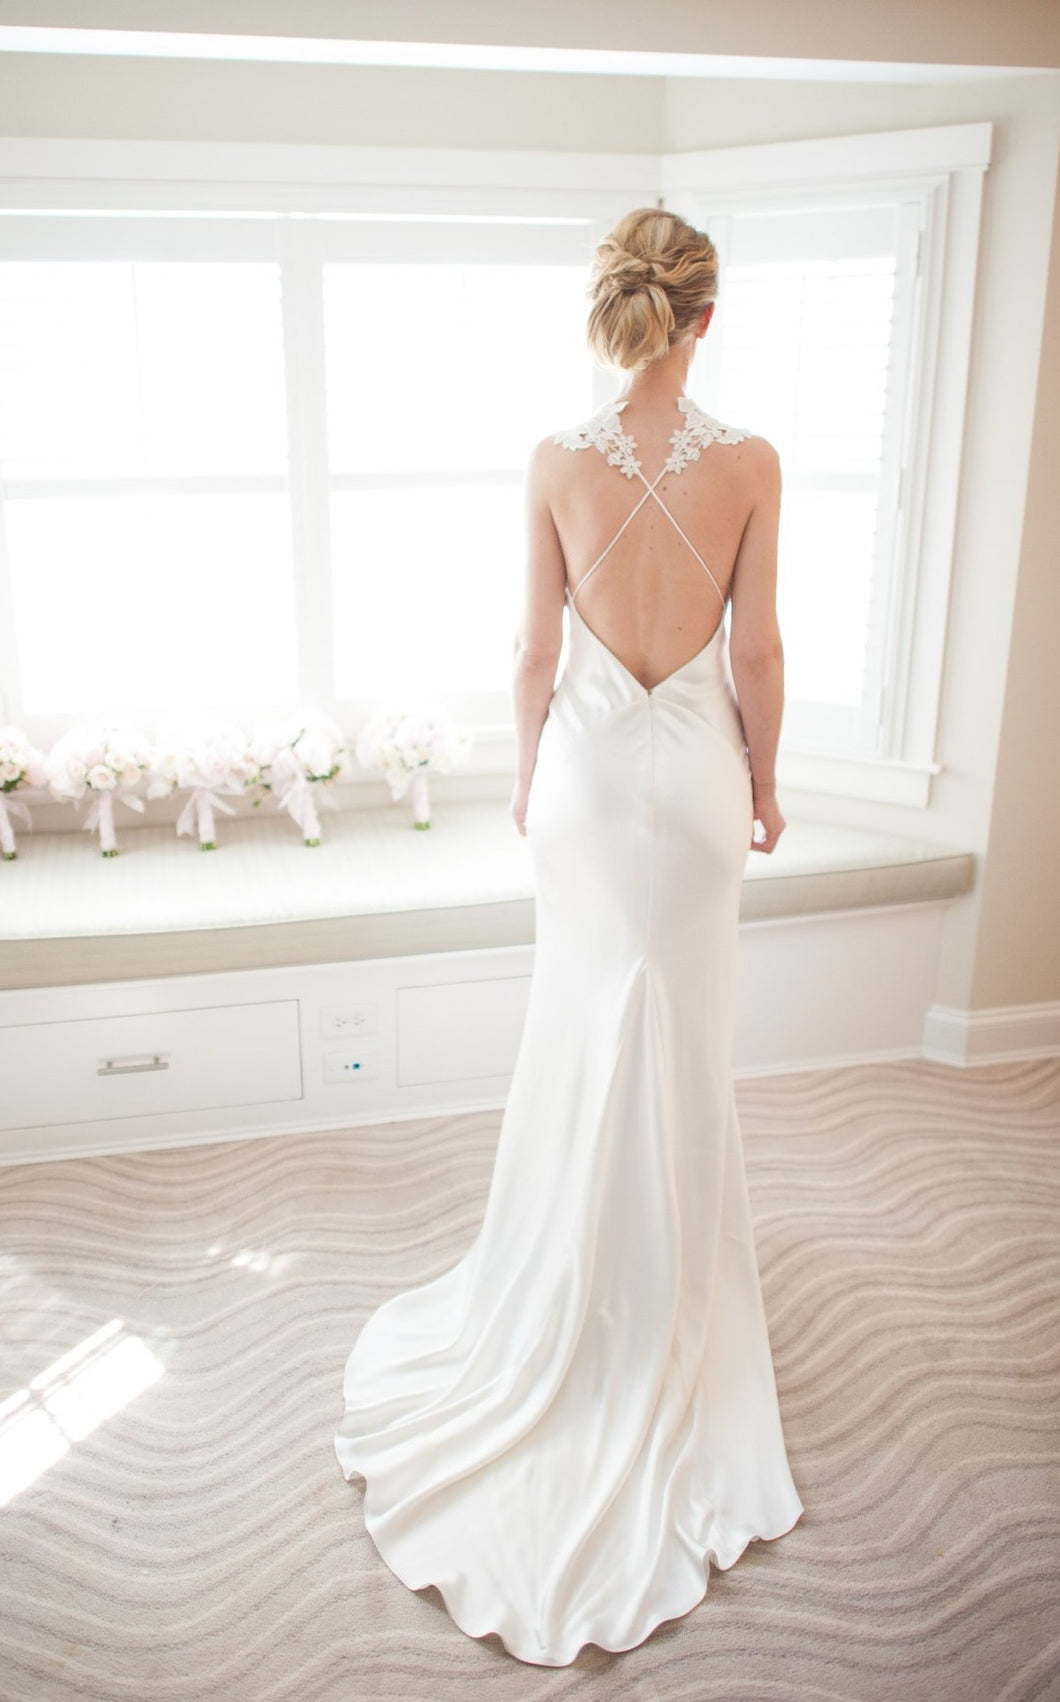 Elizabeth Fillmore 'Kara' wedding dress size-06 PREOWNED